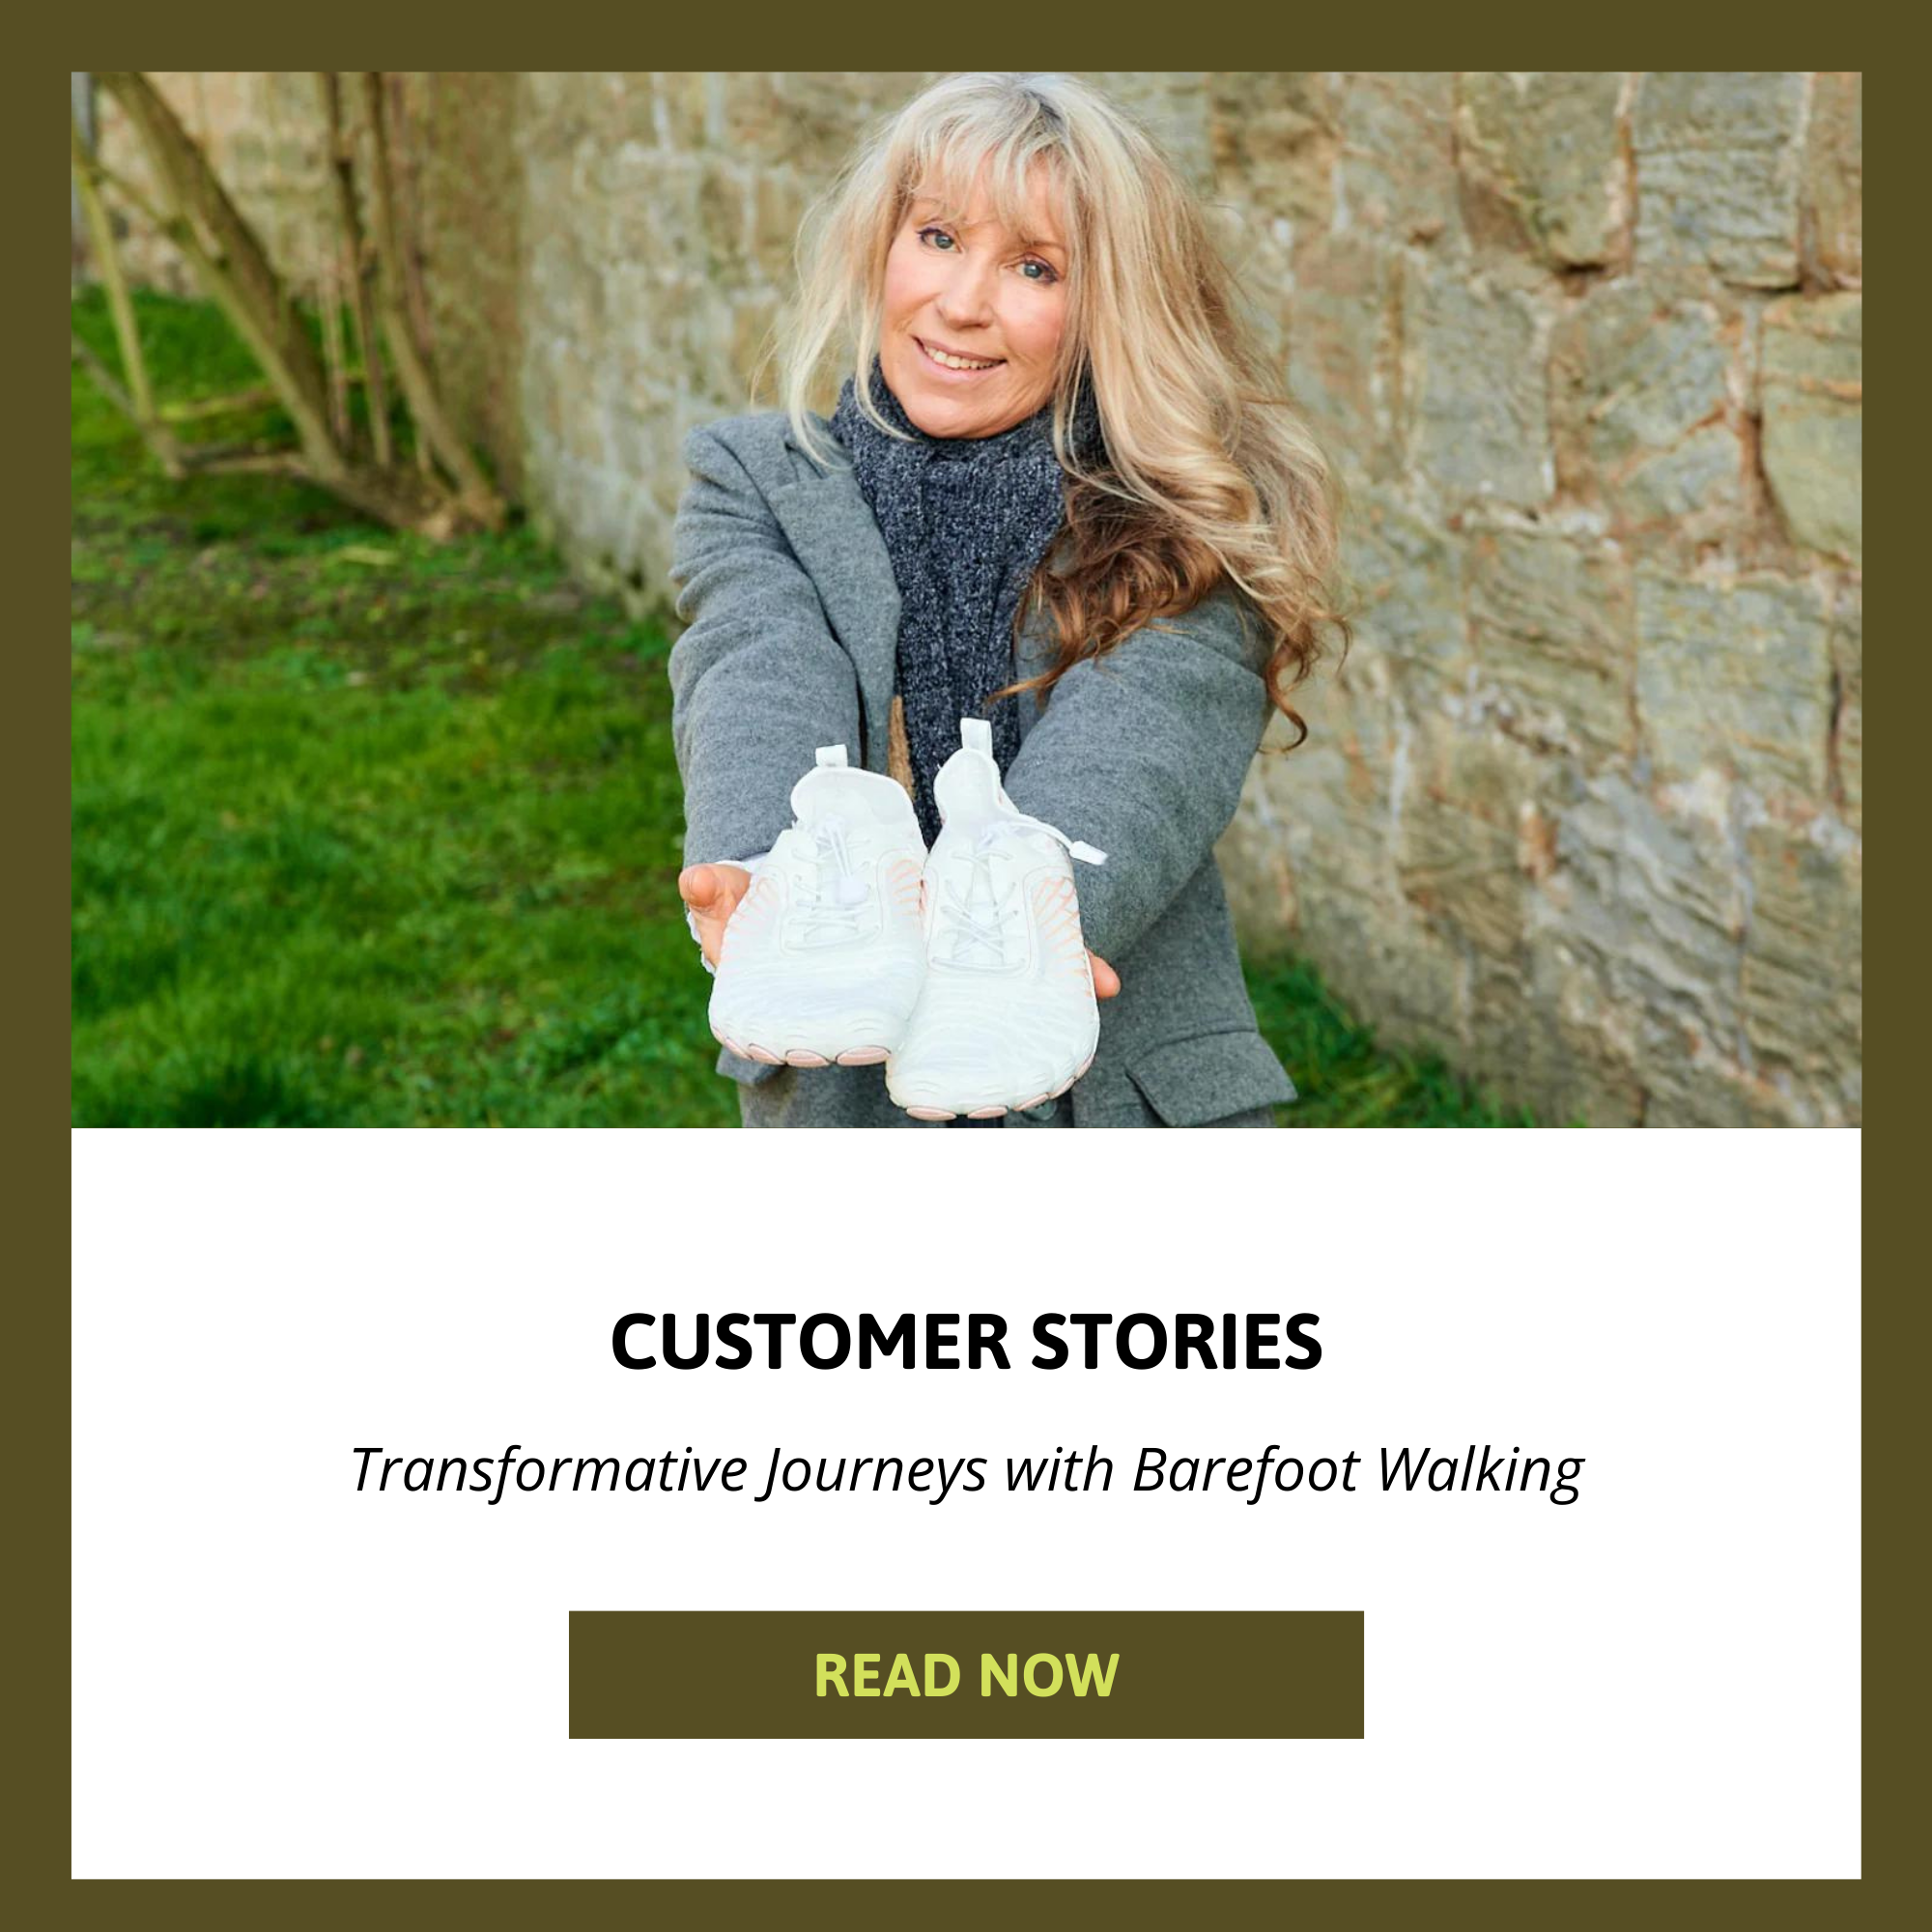 Customer Stories: Transformative Journeys with Barefoot Walking